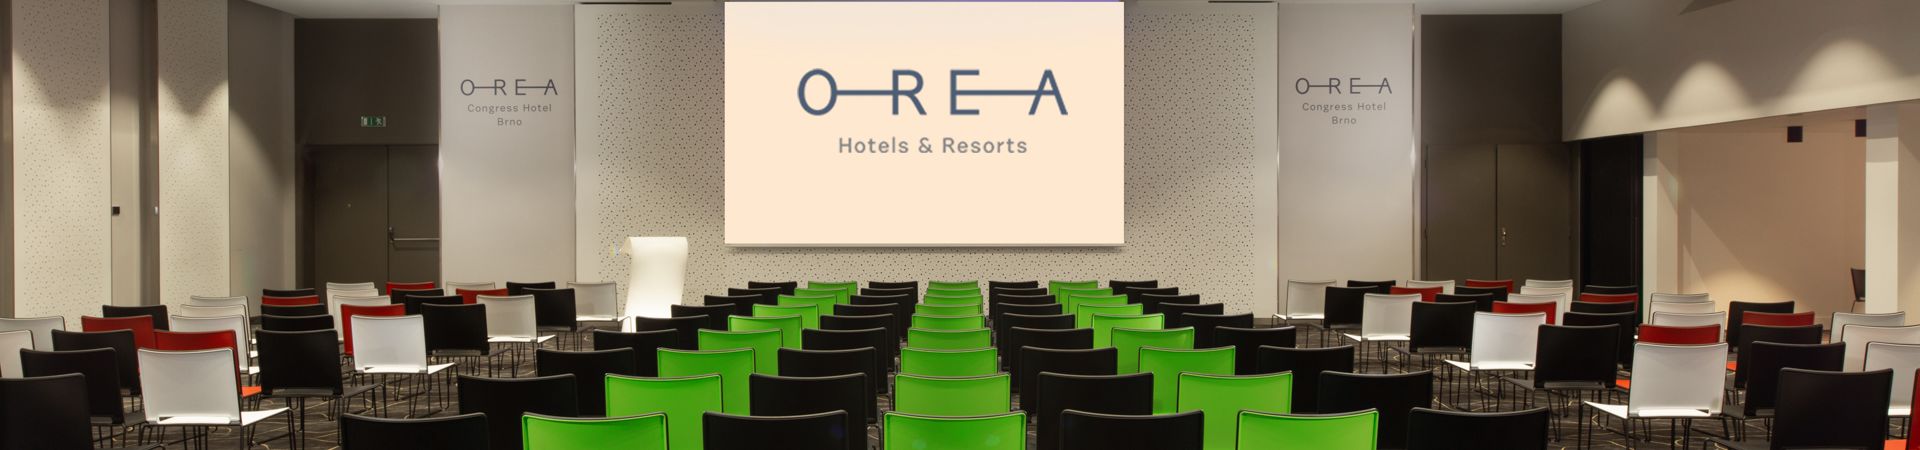 Orea Congress Hotel - Kongresová hala A